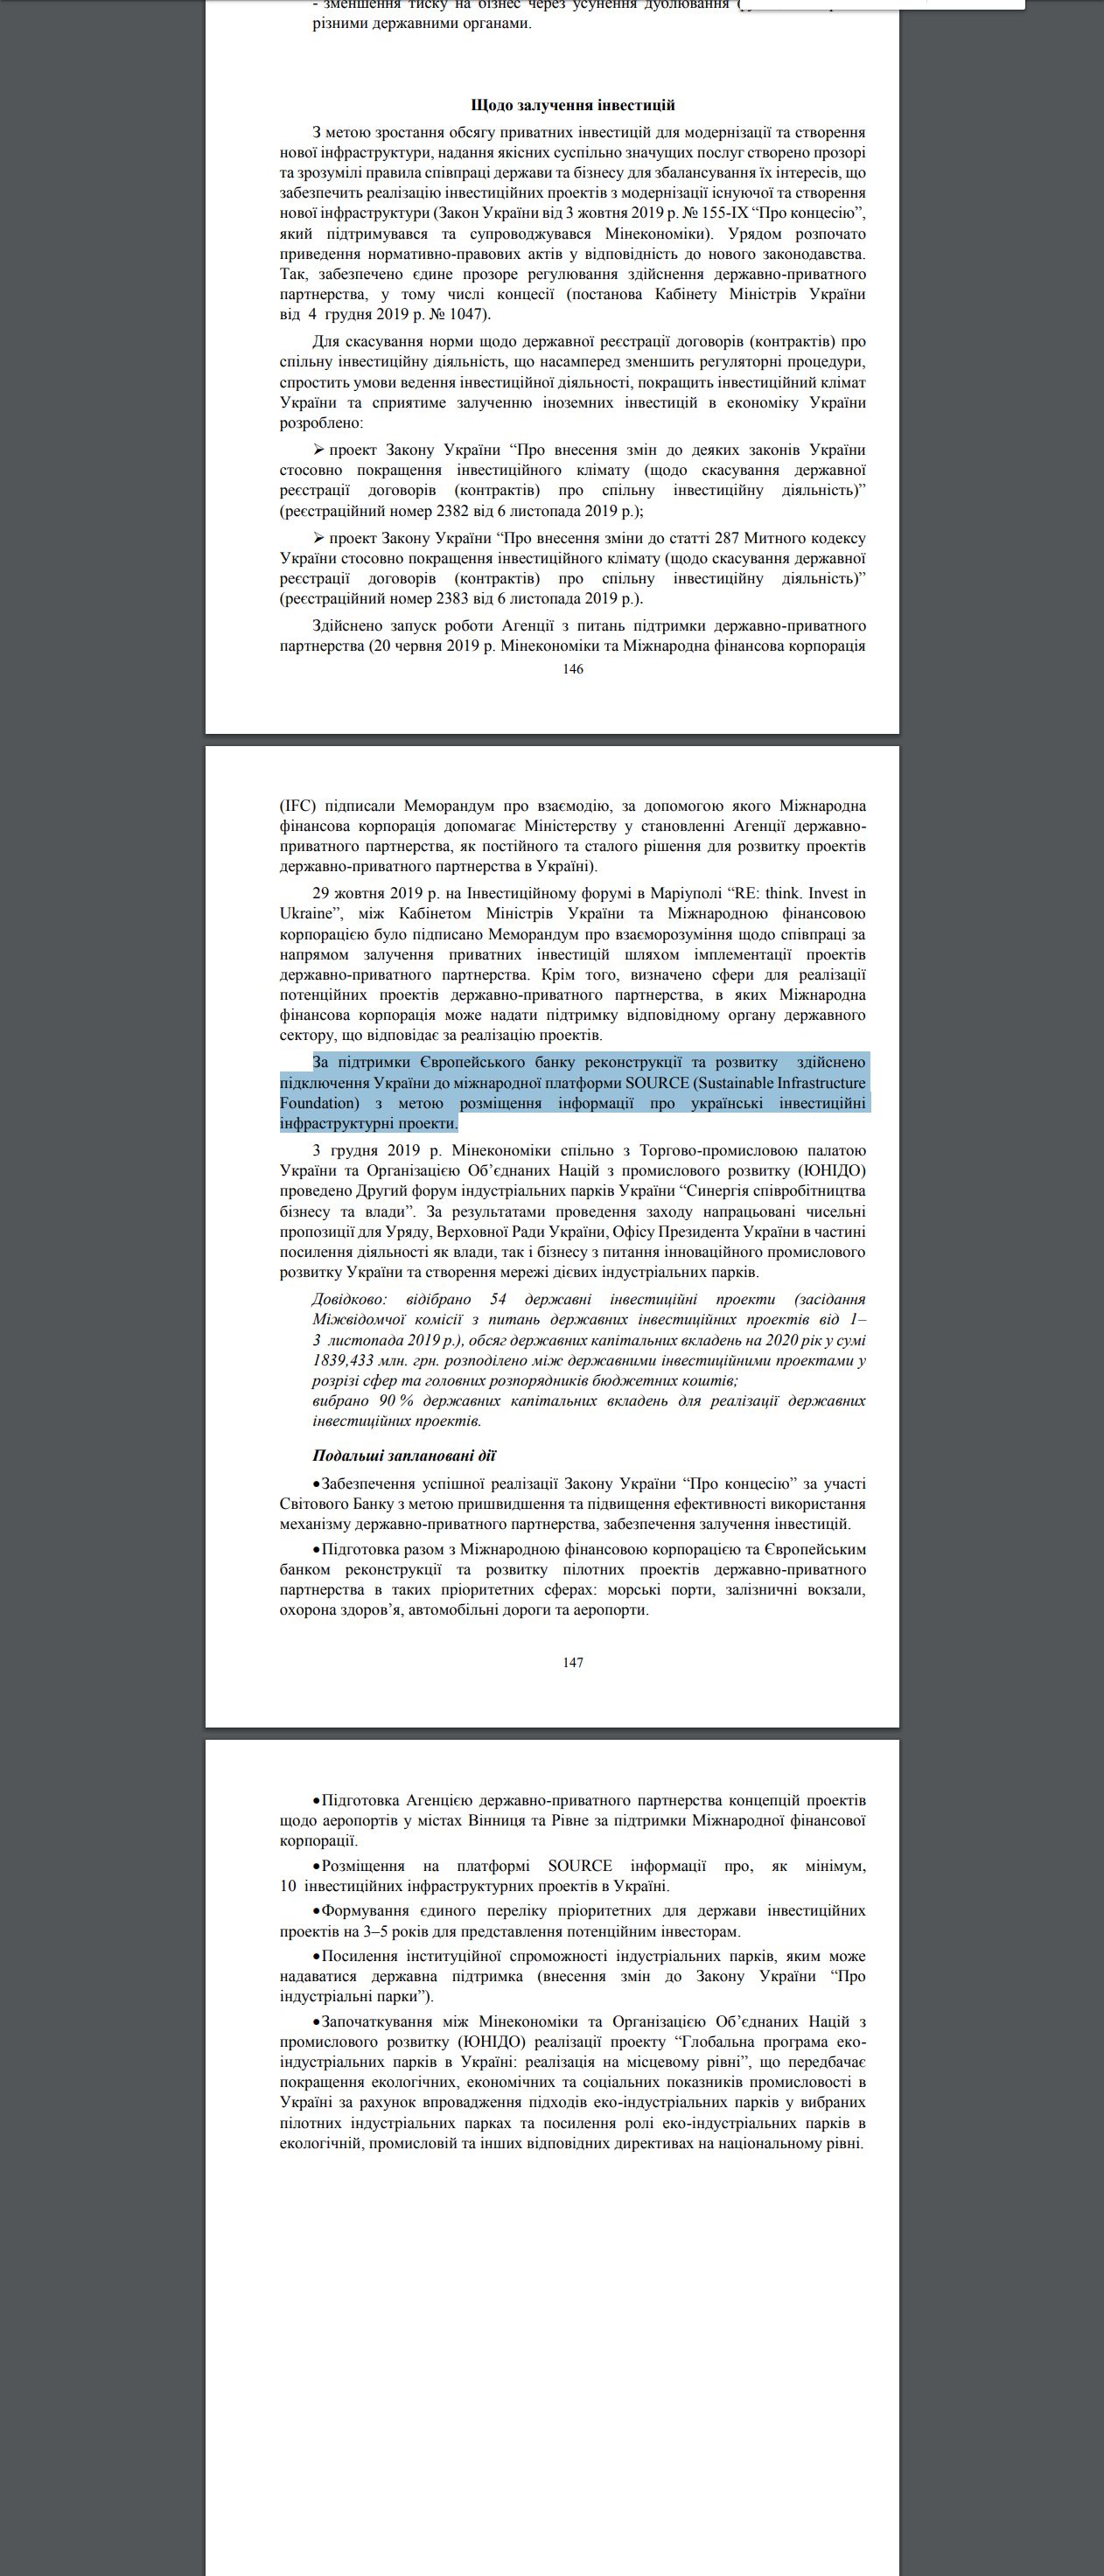 https://www.kmu.gov.ua/storage/app/sites/1/18%20-%20Department/18%20-%20PDF/02.2020/zvit.pdf